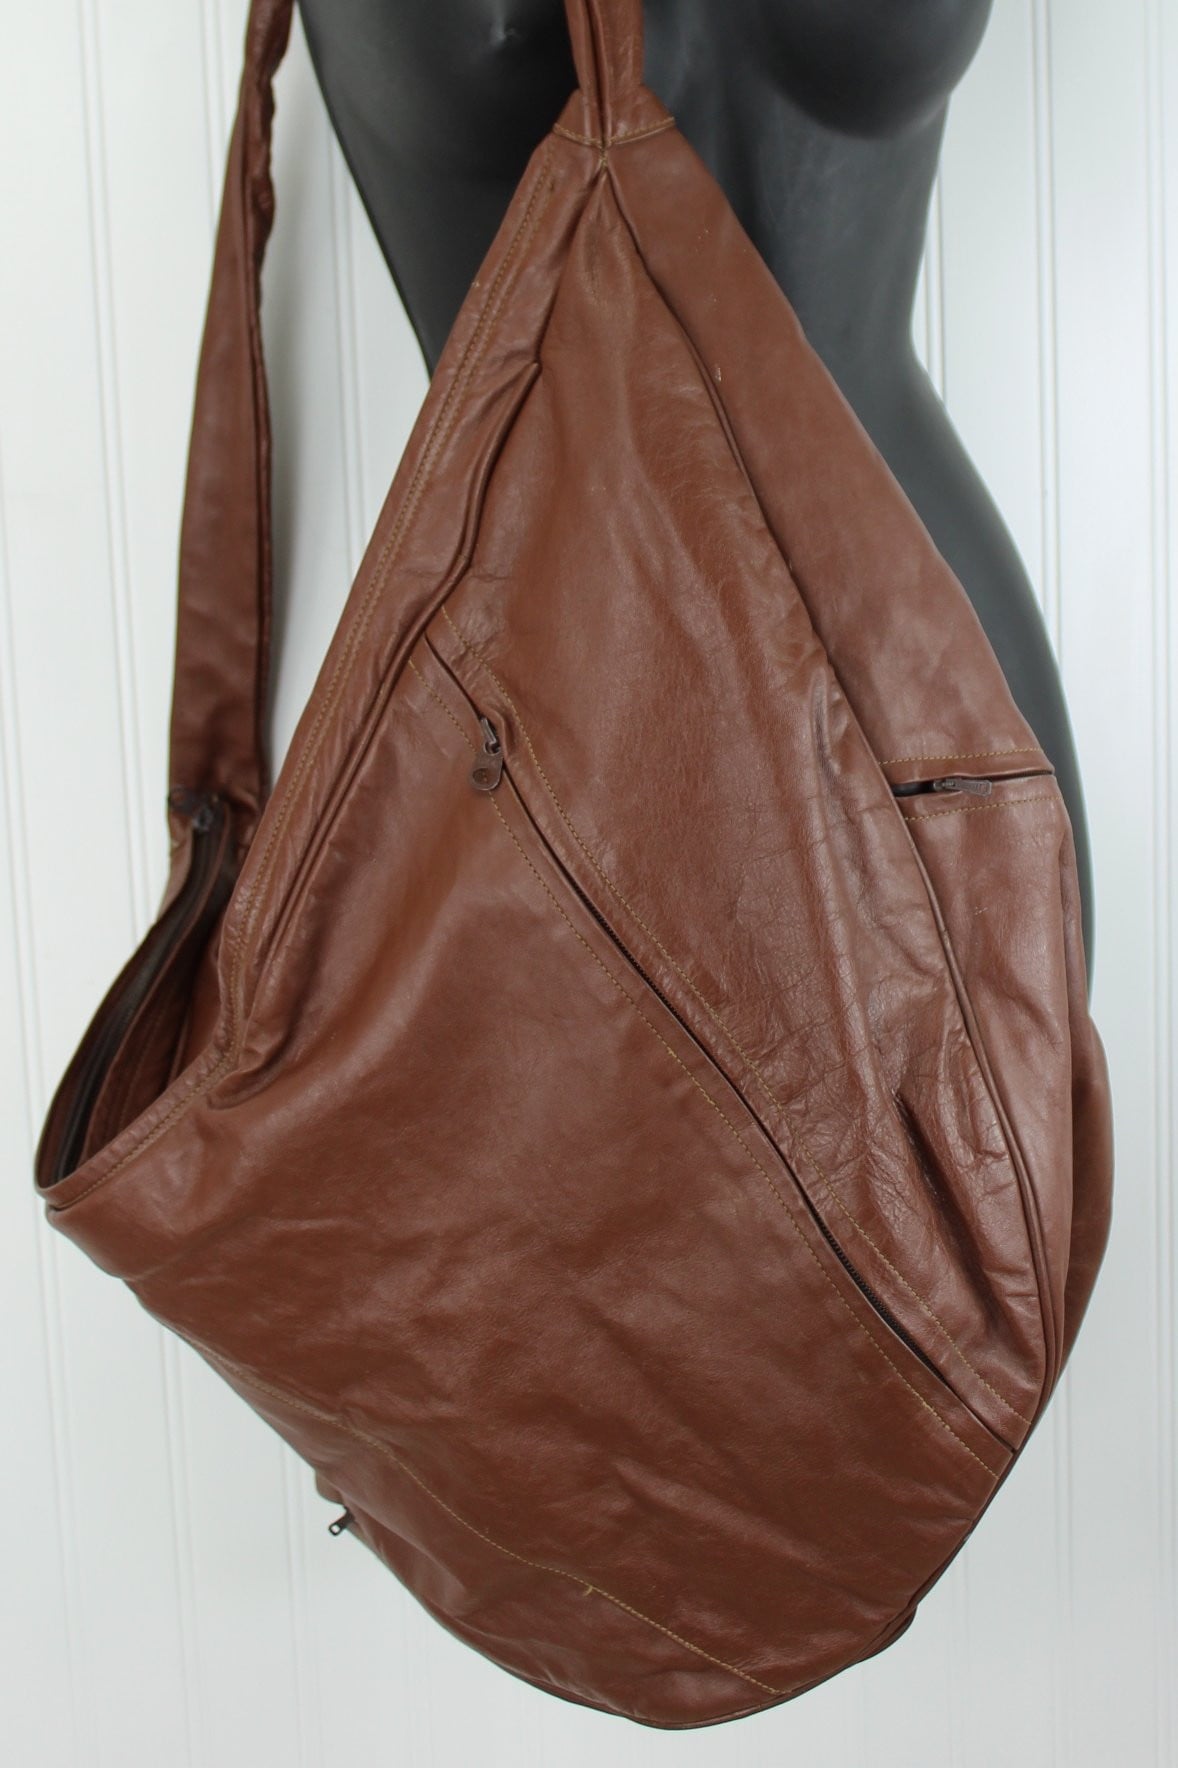 Flores Bags Leather Sling Shoulder Tote Carryall Bag - Tie Shoulder Handle - Extra Large  leather intact